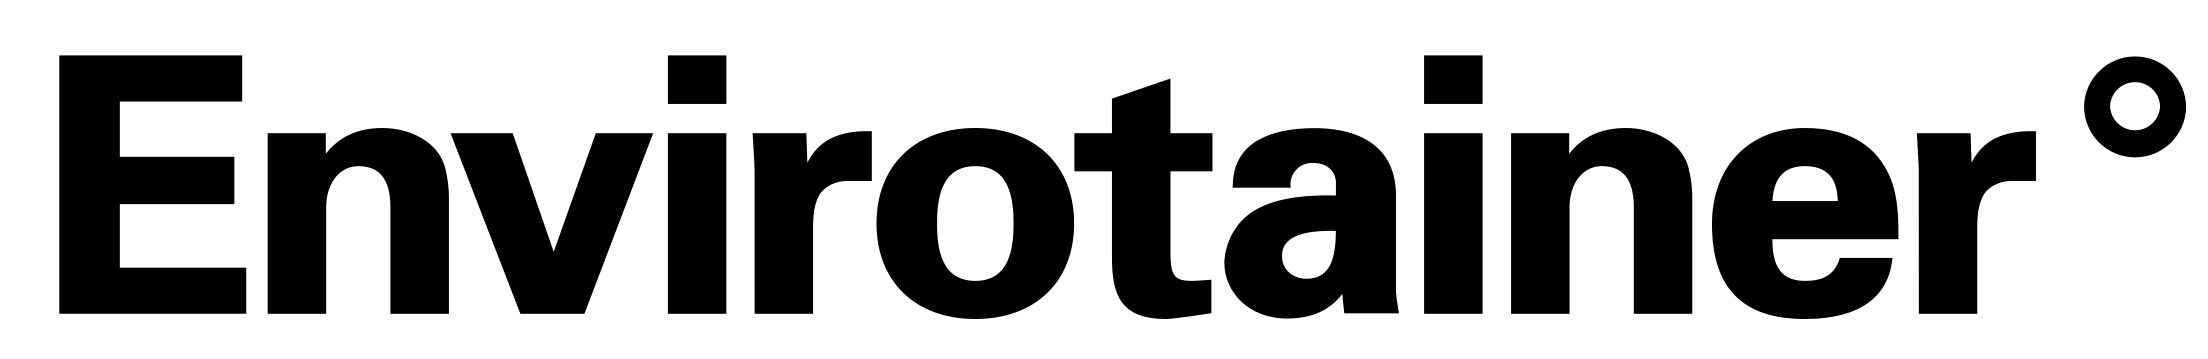 envirotainer-logo-black-and-white_cut